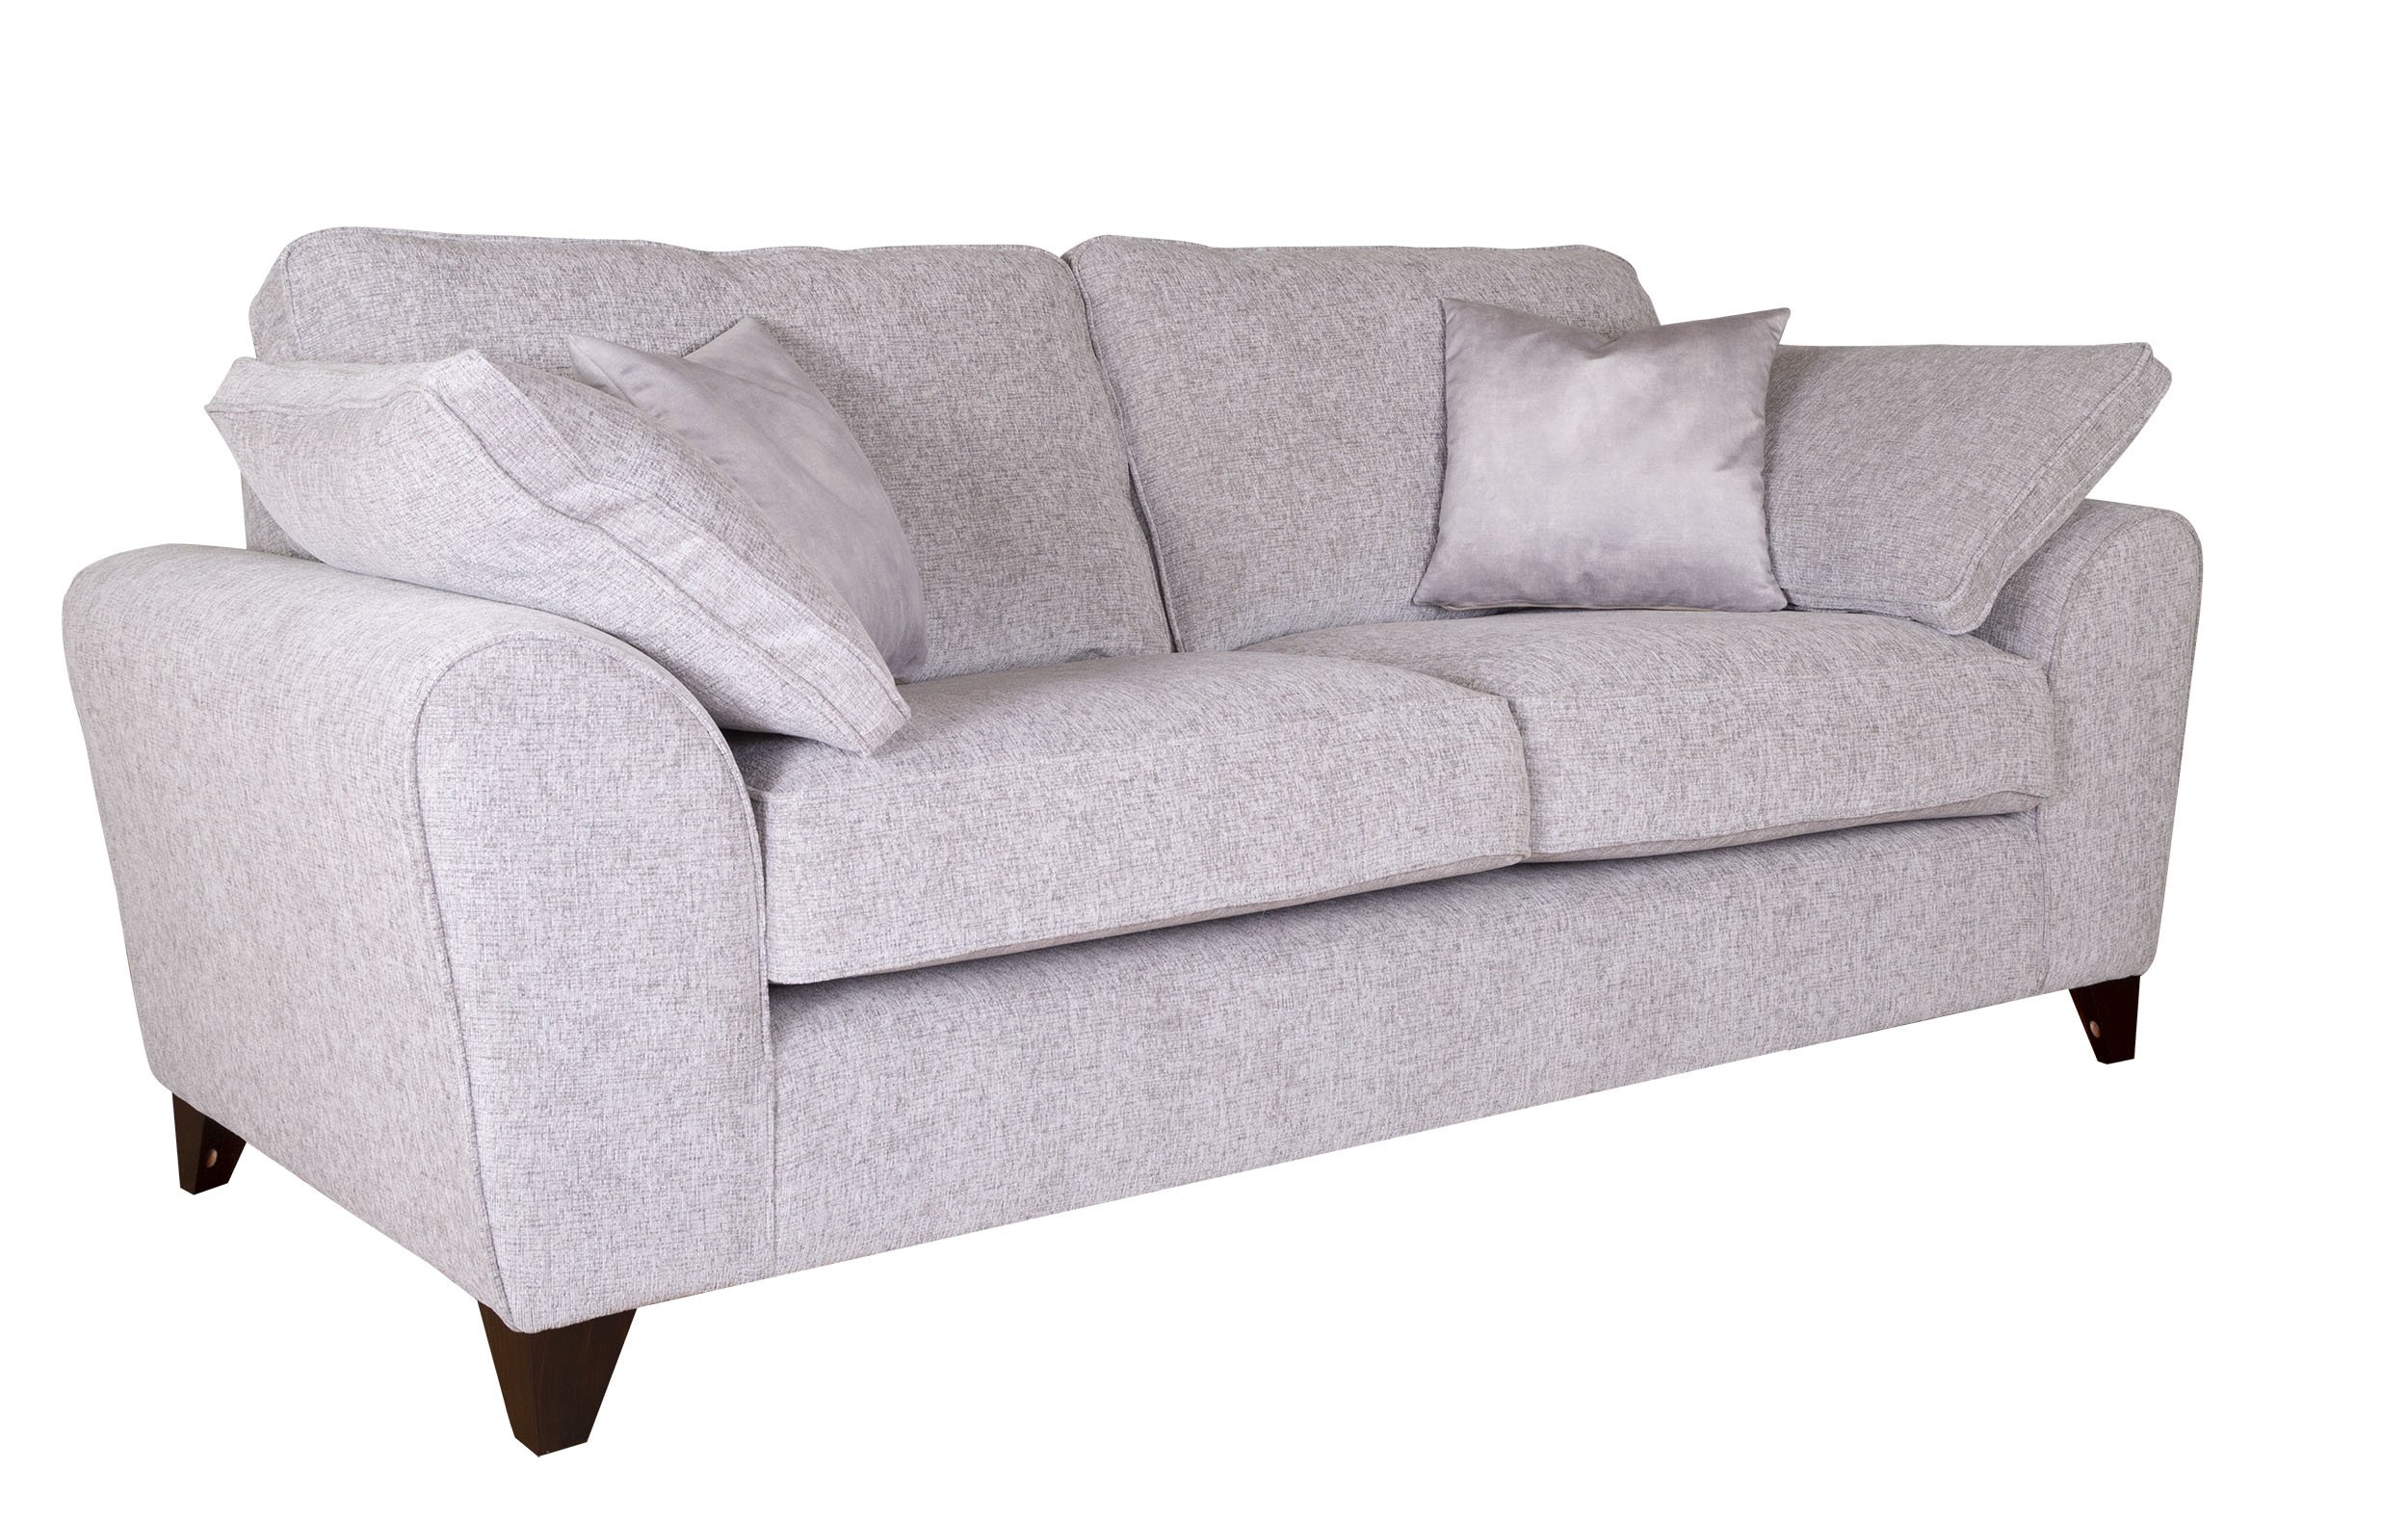 Robyn - 3 Seater Sofa - Angled.jpg